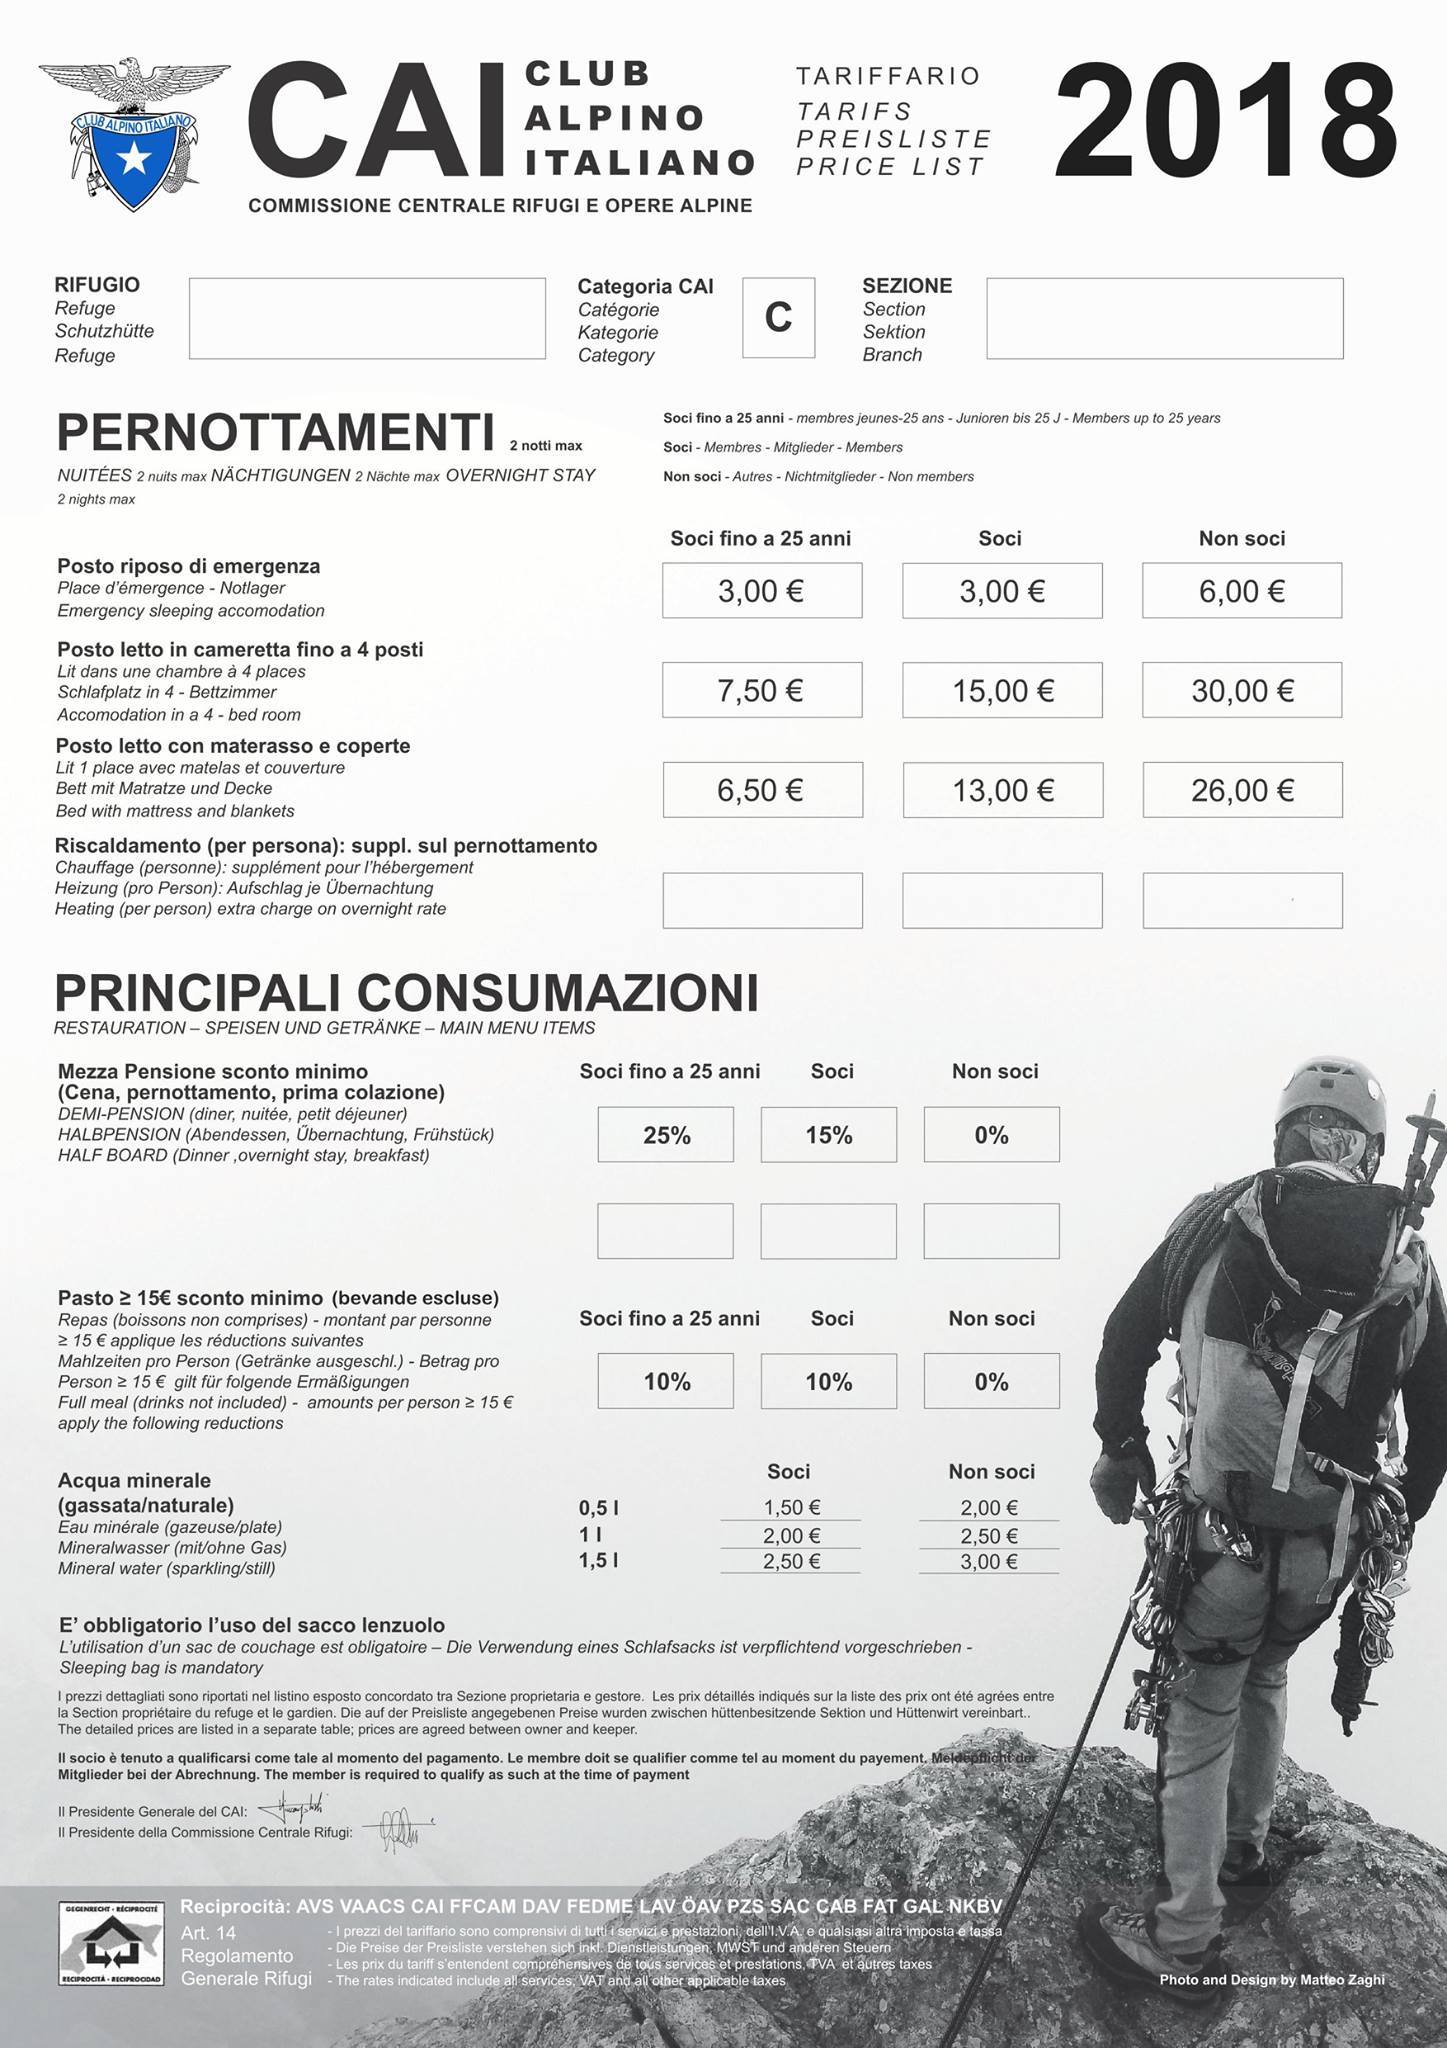 Tariffario Club Alpino Italiano